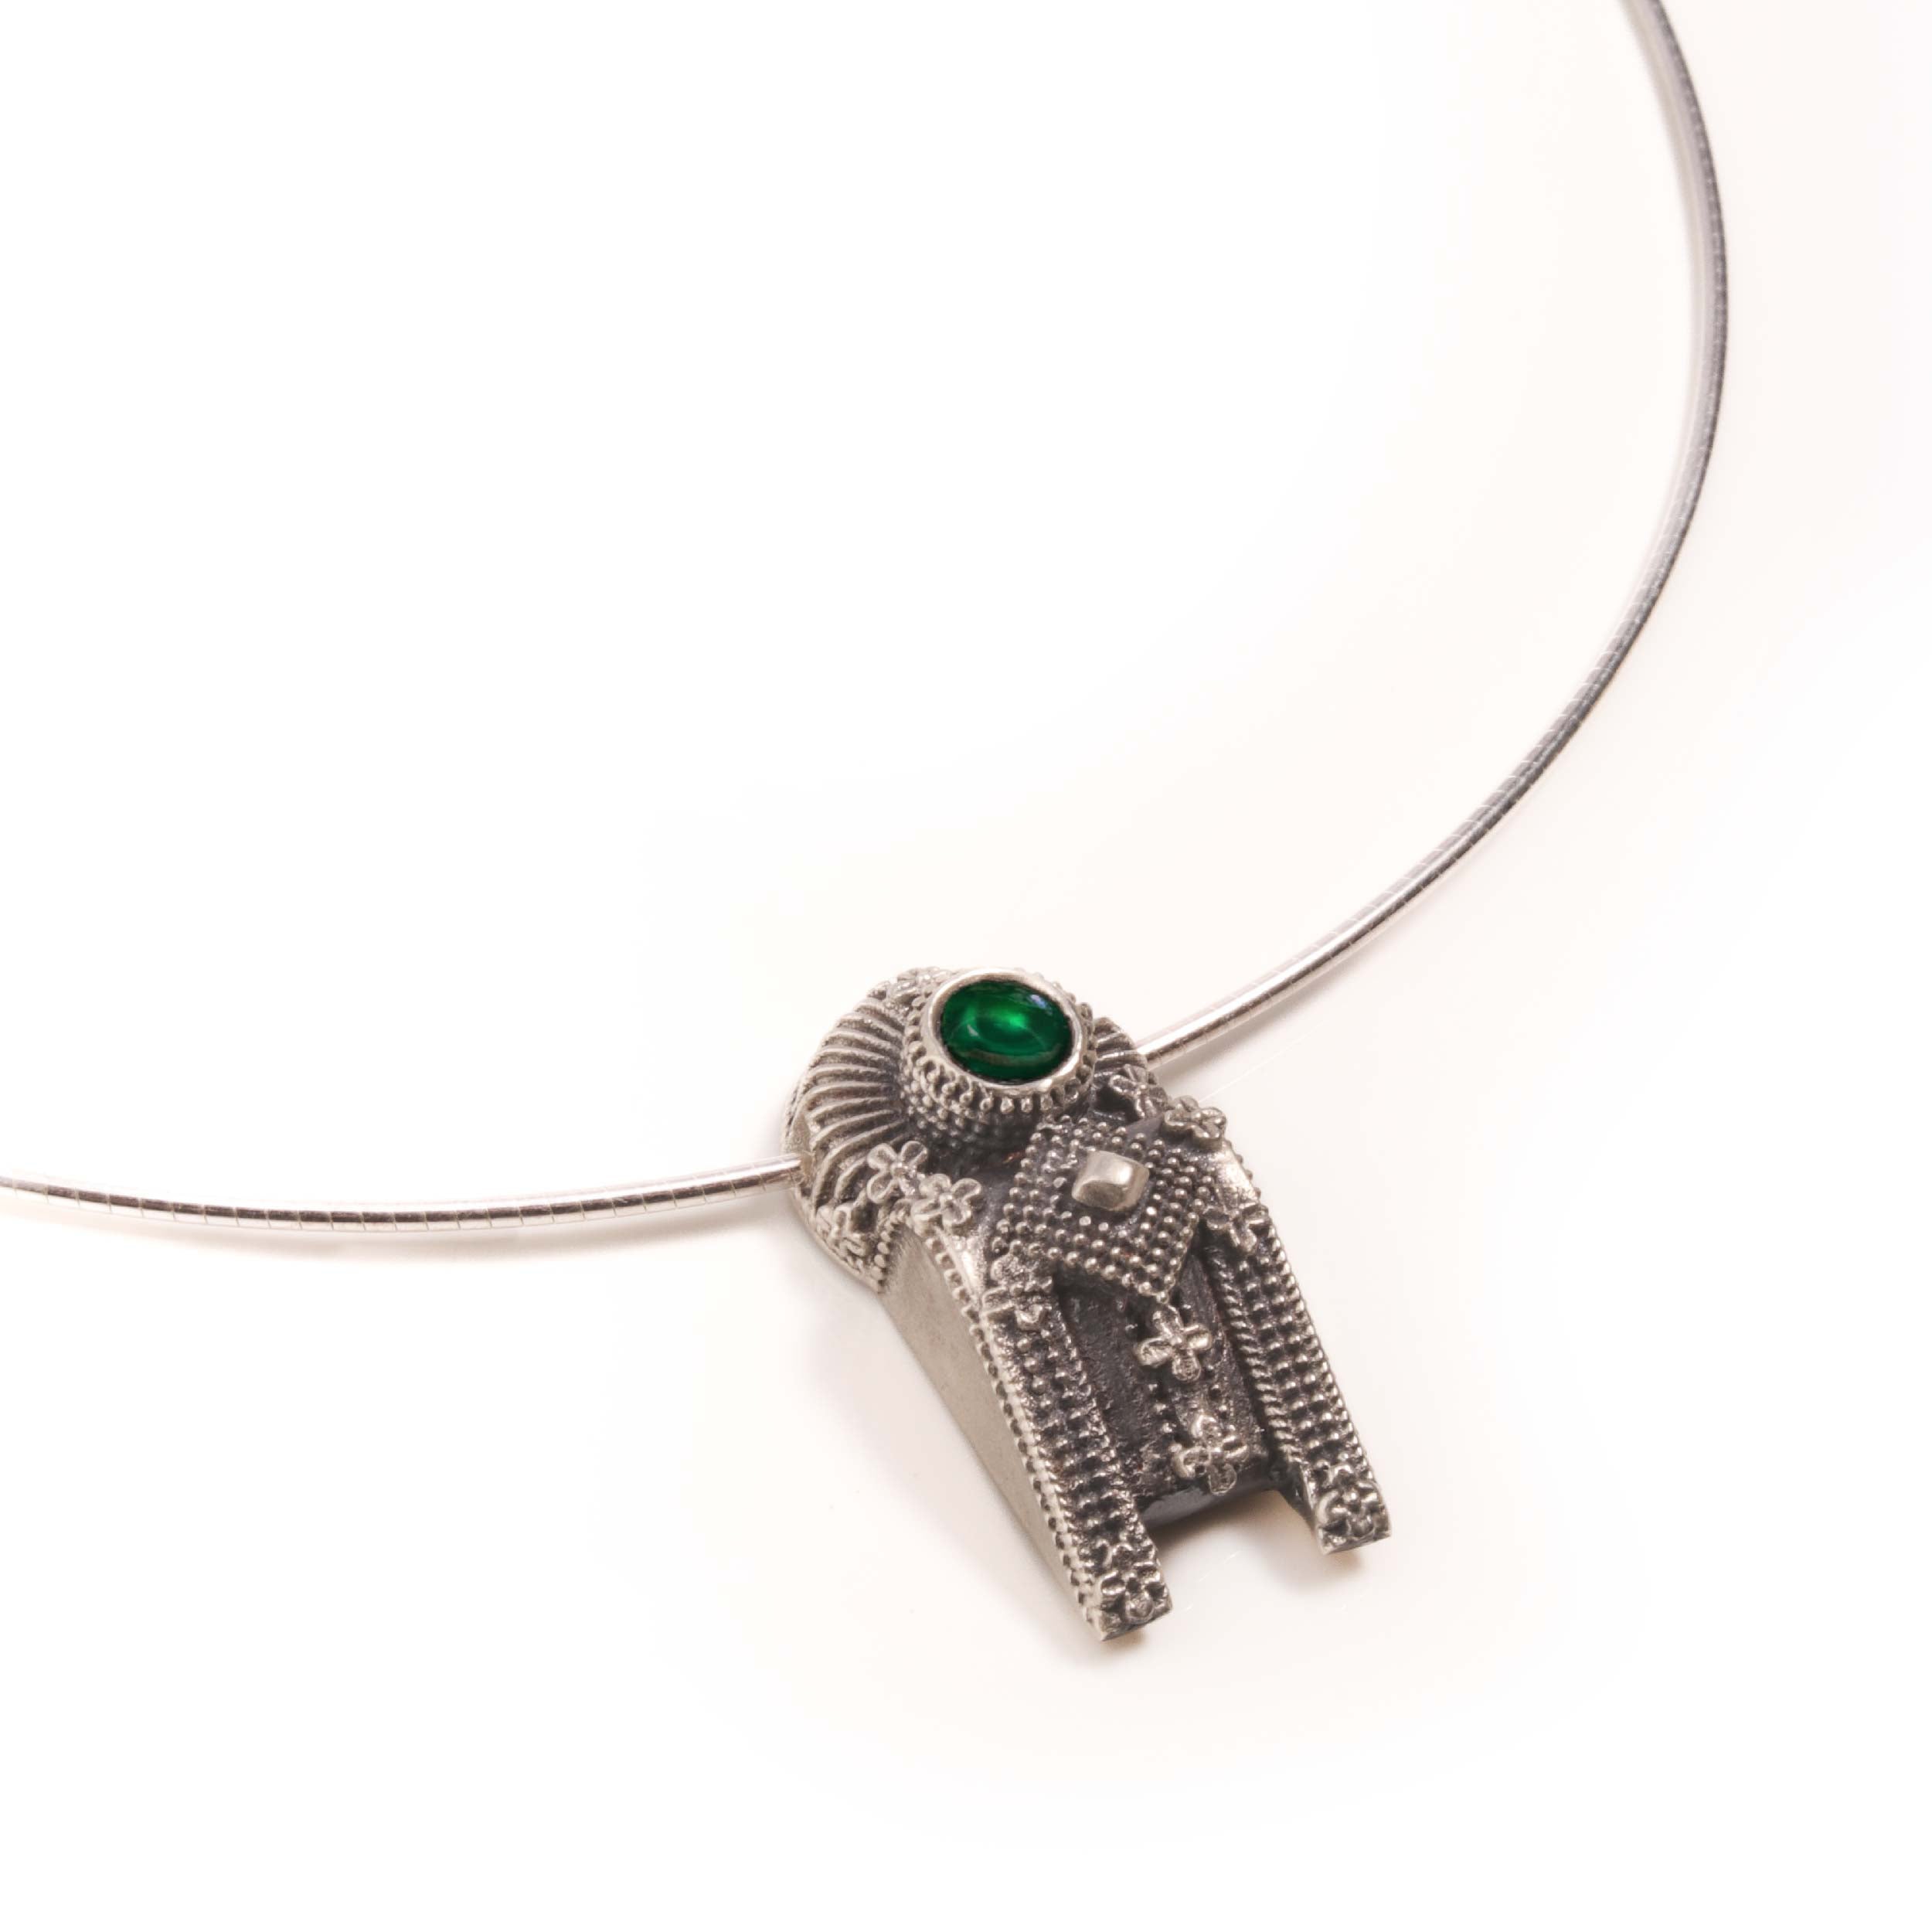 Thoppa Taali Silver Pendant Chain With Green Onyx